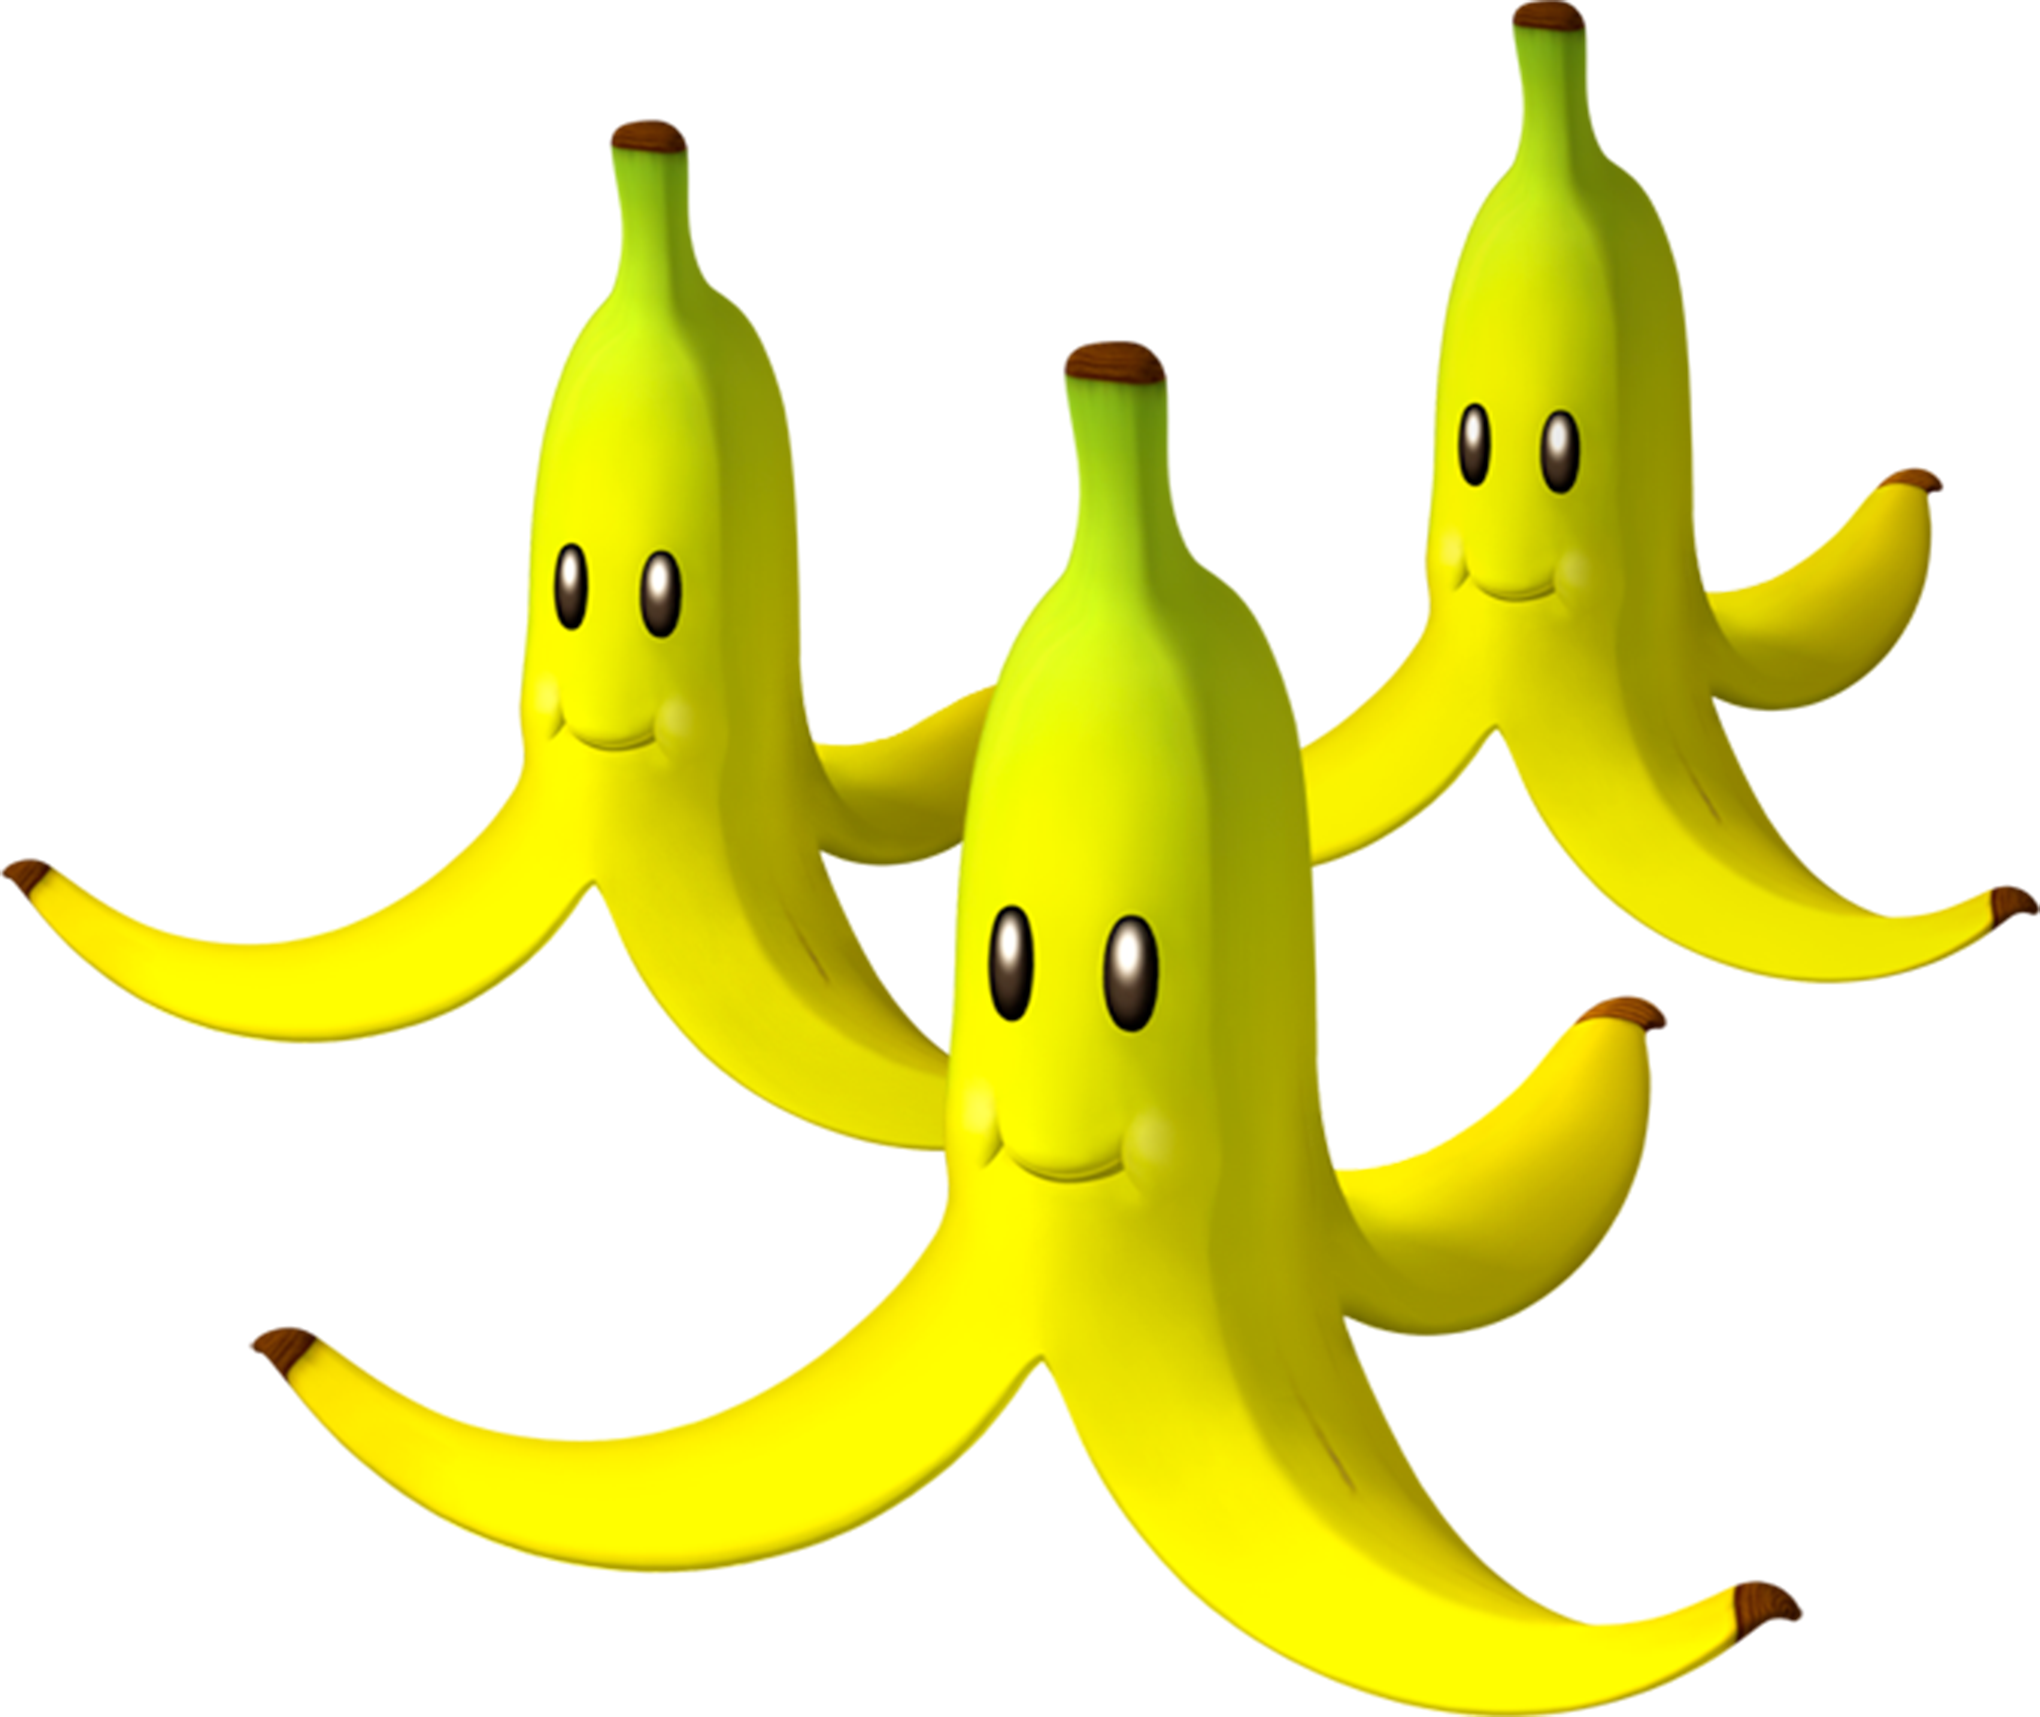 https://vignette.wikia.nocookie.net/mariokart/images/b/b6/Triple_Bananas_Artwork_-_Mario_Kart_Wii.png/revision/latest?cb=20190118225303